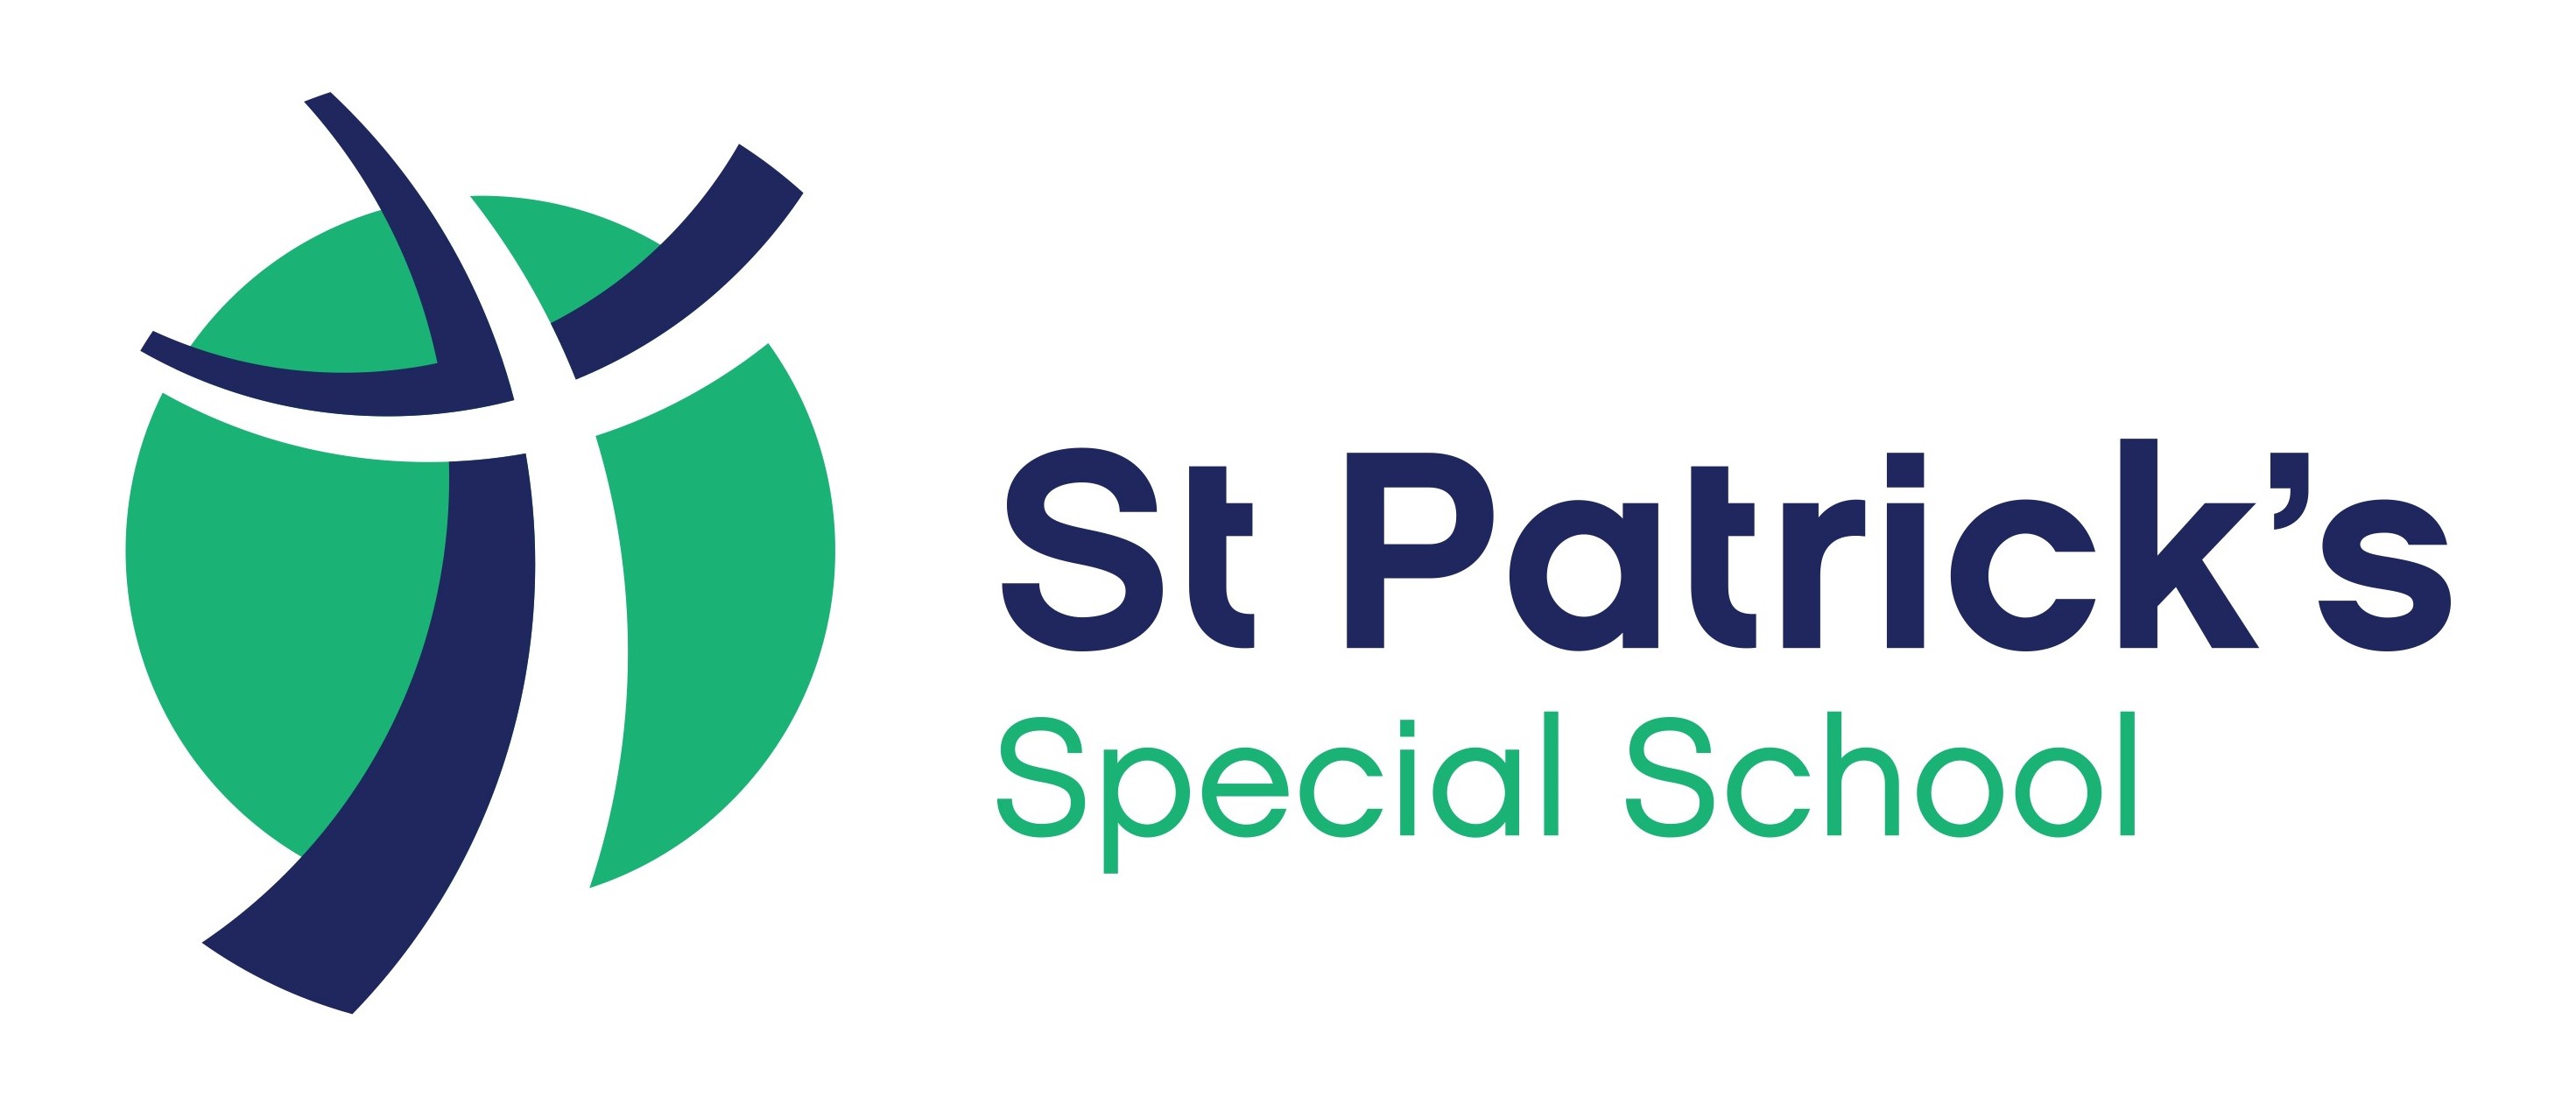 St Patrick's Special School 